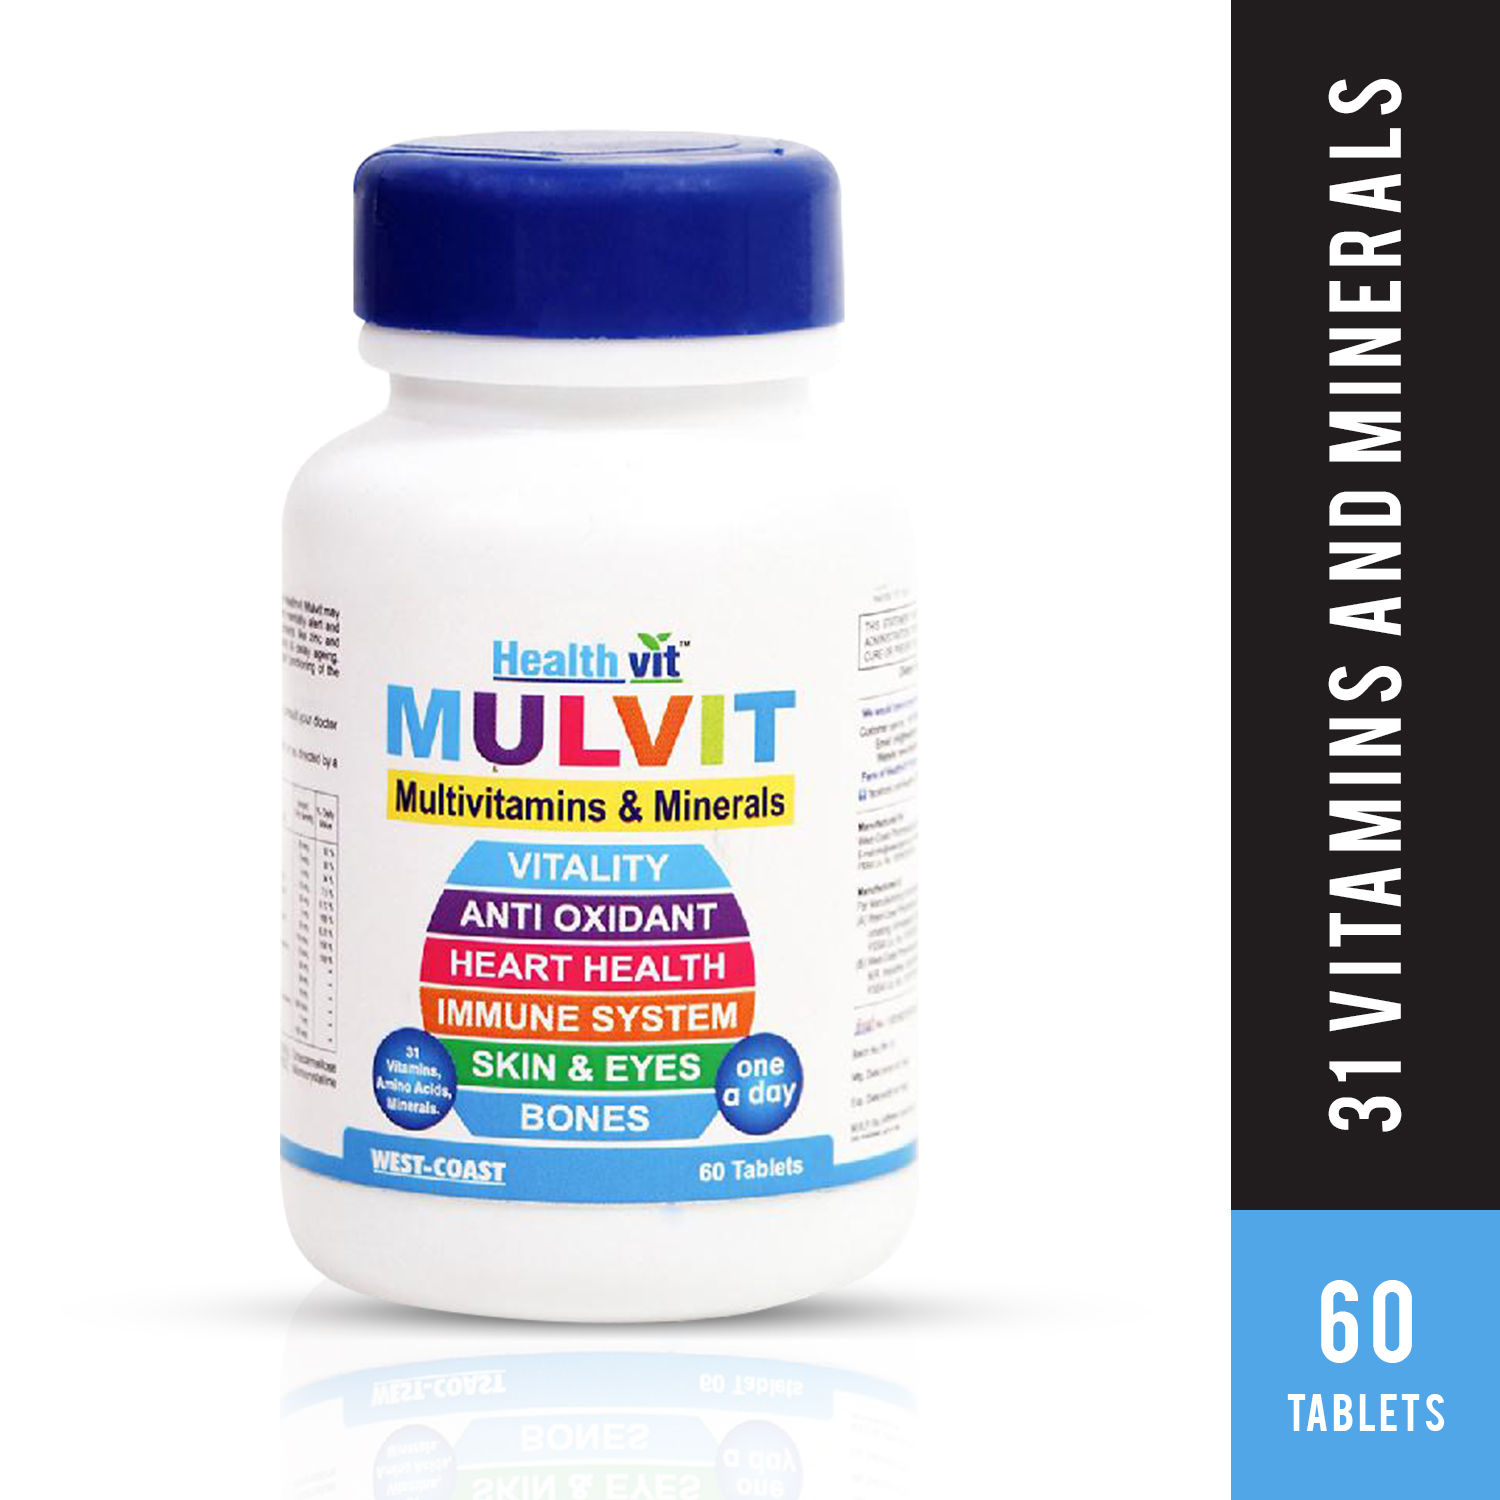 HealthVit Mulvit Multivitamins And Minerals (60 Tablets)